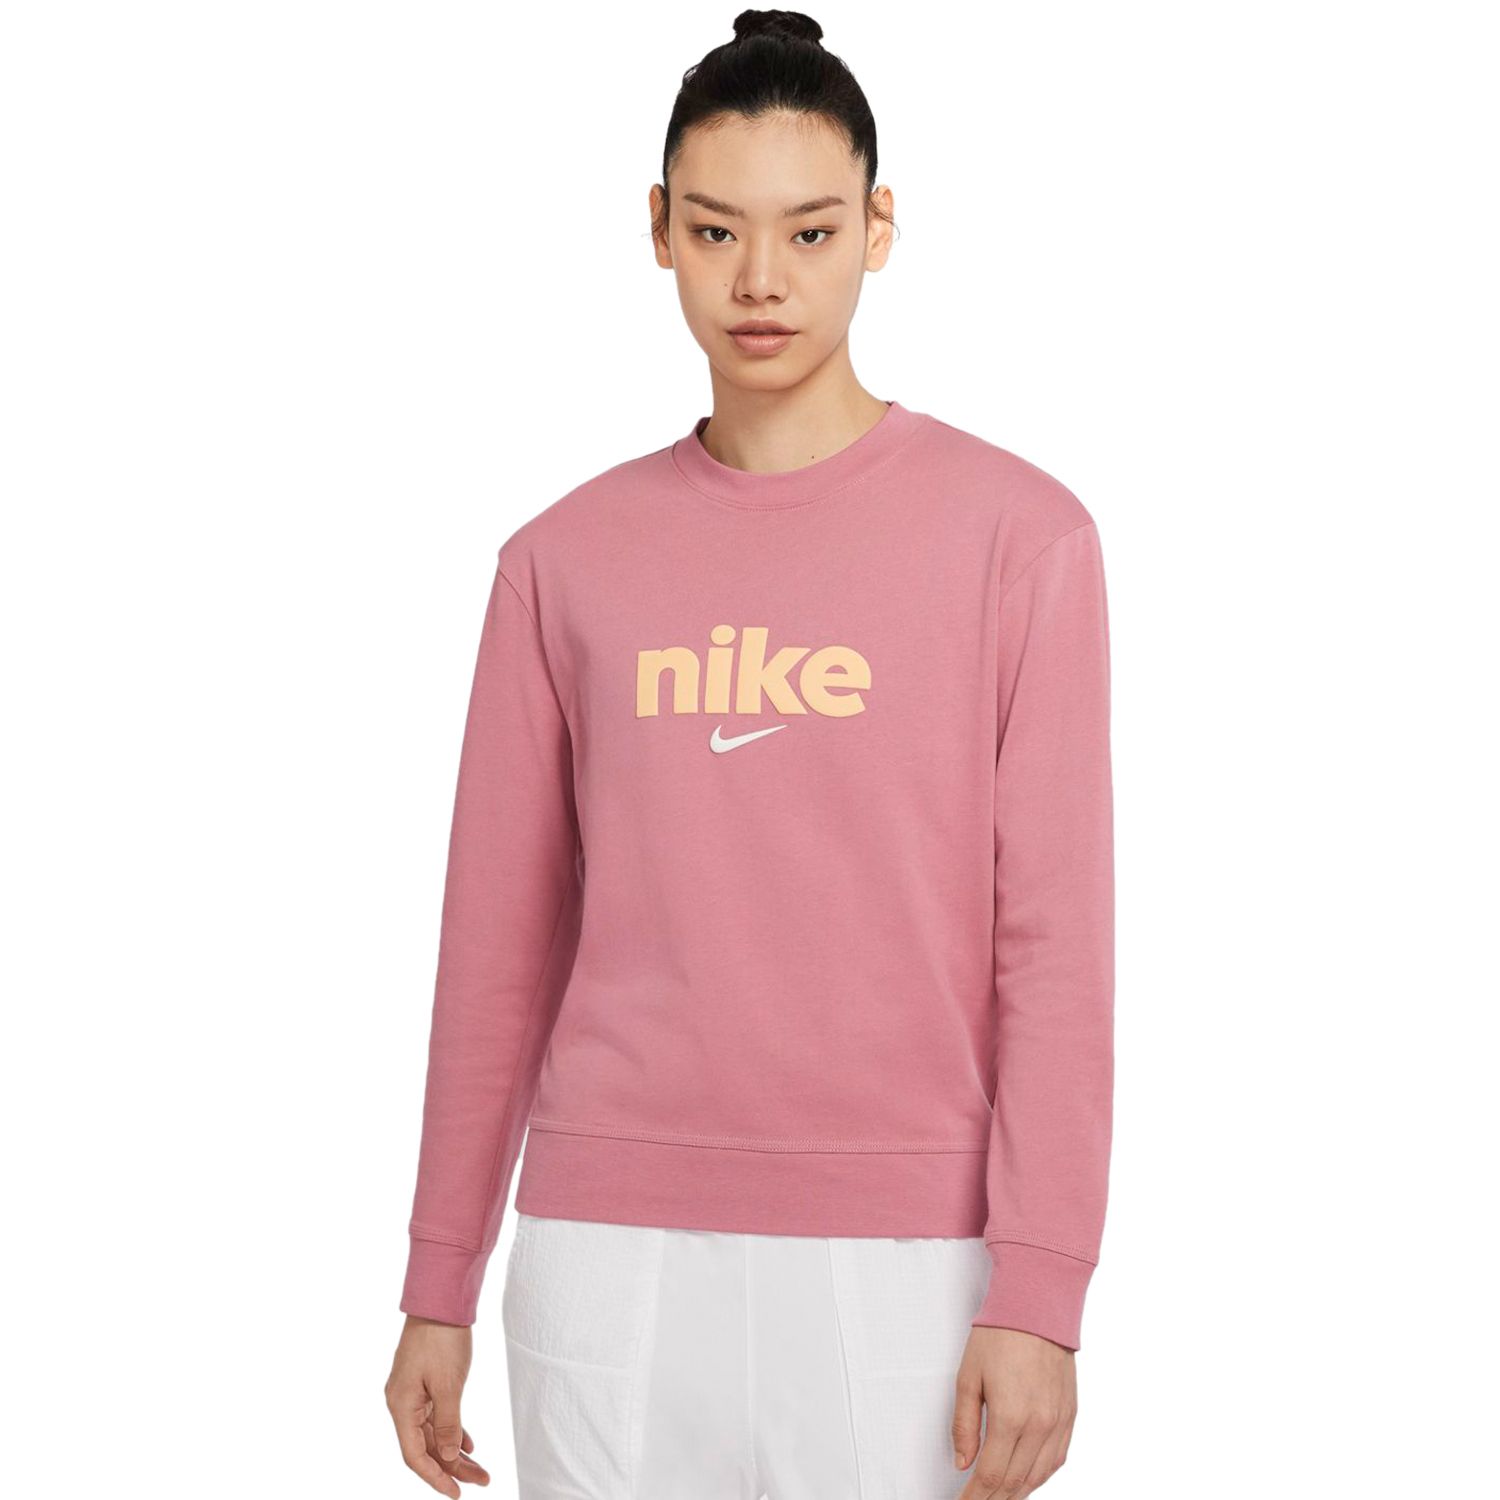 Women's Nike Crew Sweatshirt